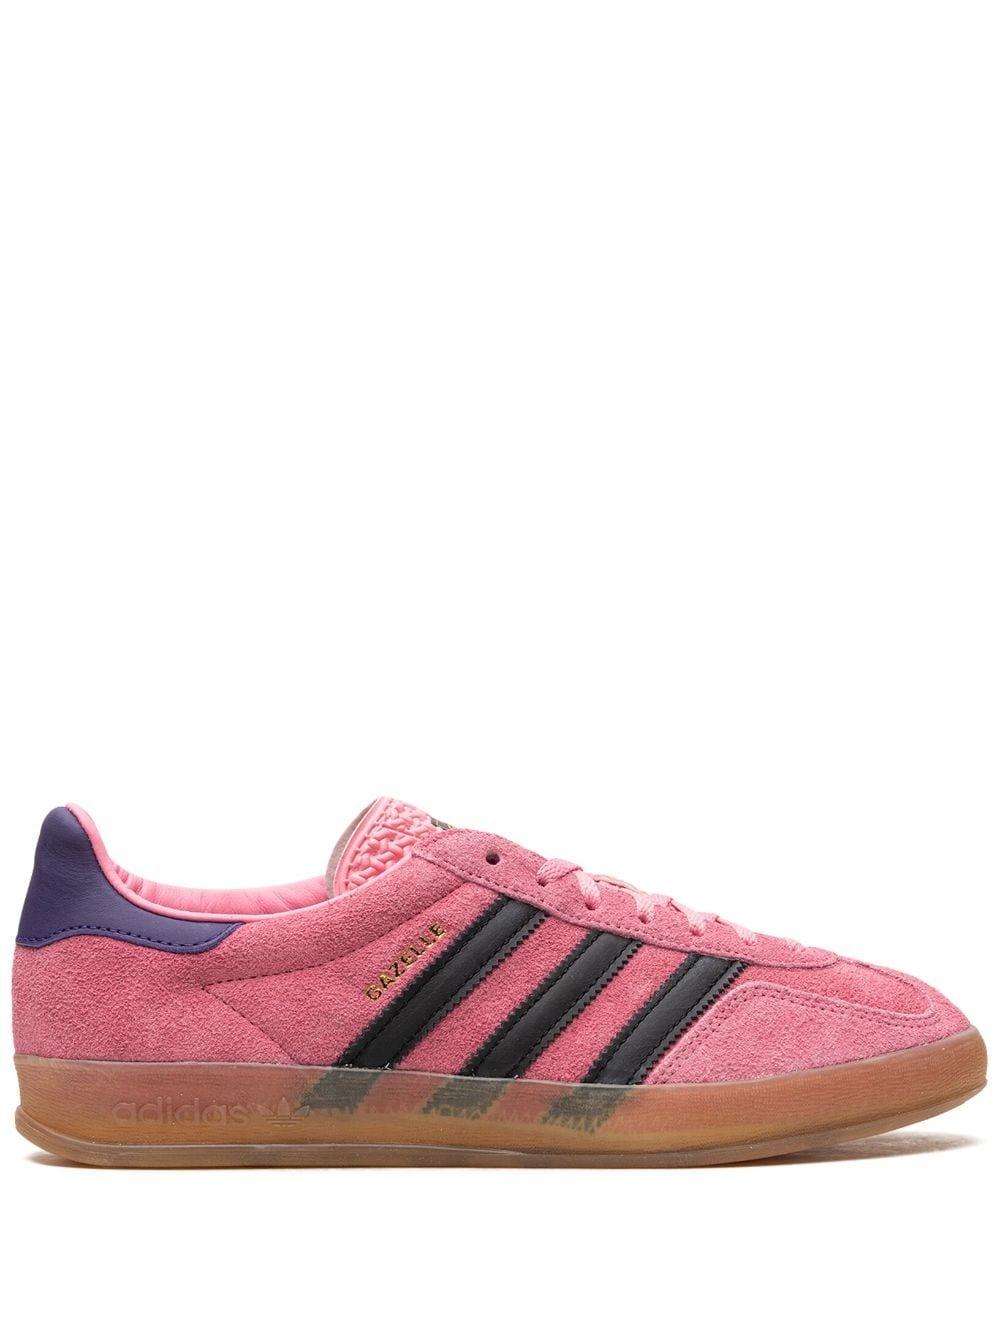 adidas Gazelle Indoor Suede Sneakers in Pink | Lyst